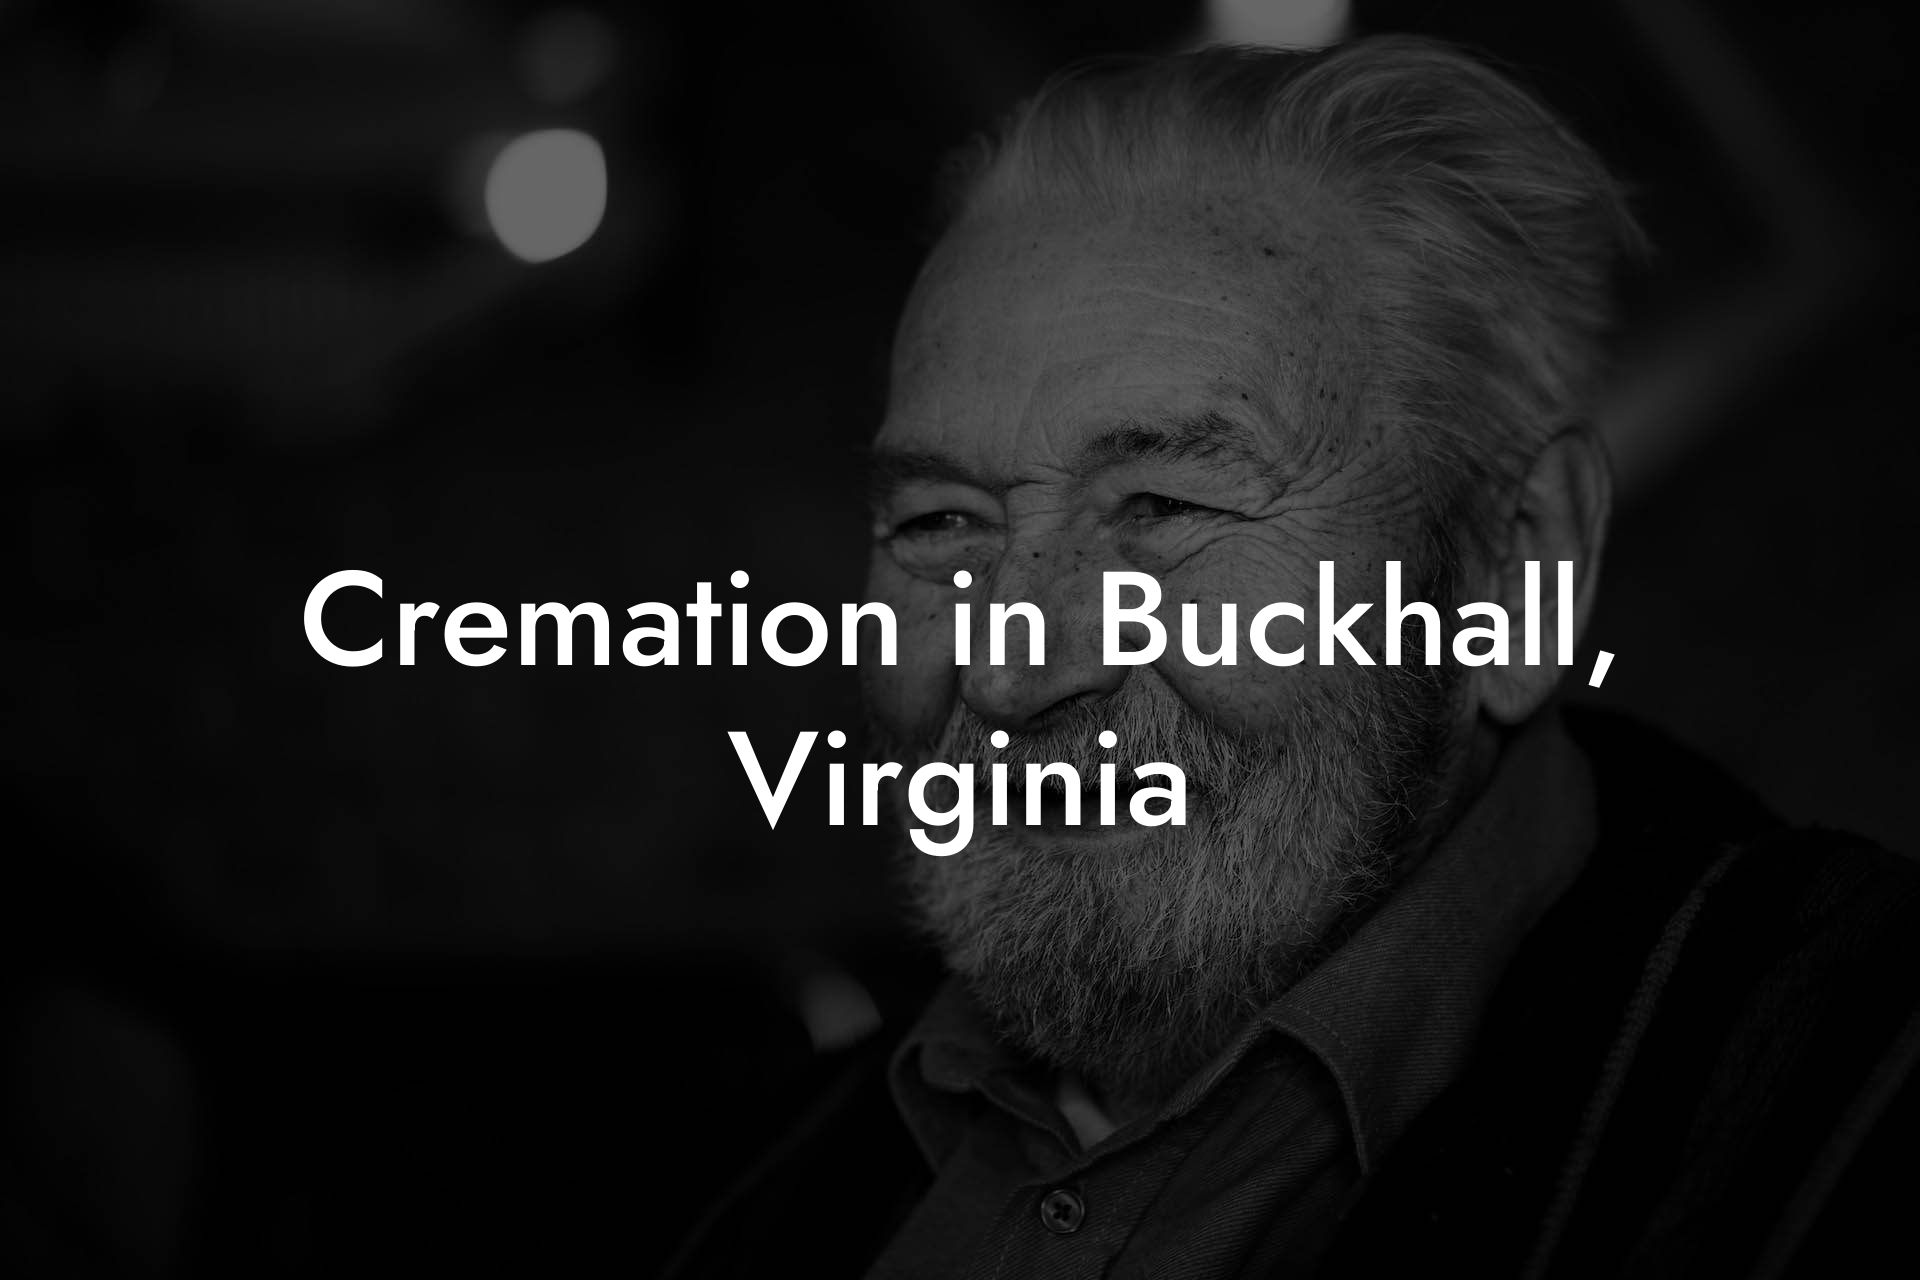 Cremation in Buckhall, Virginia